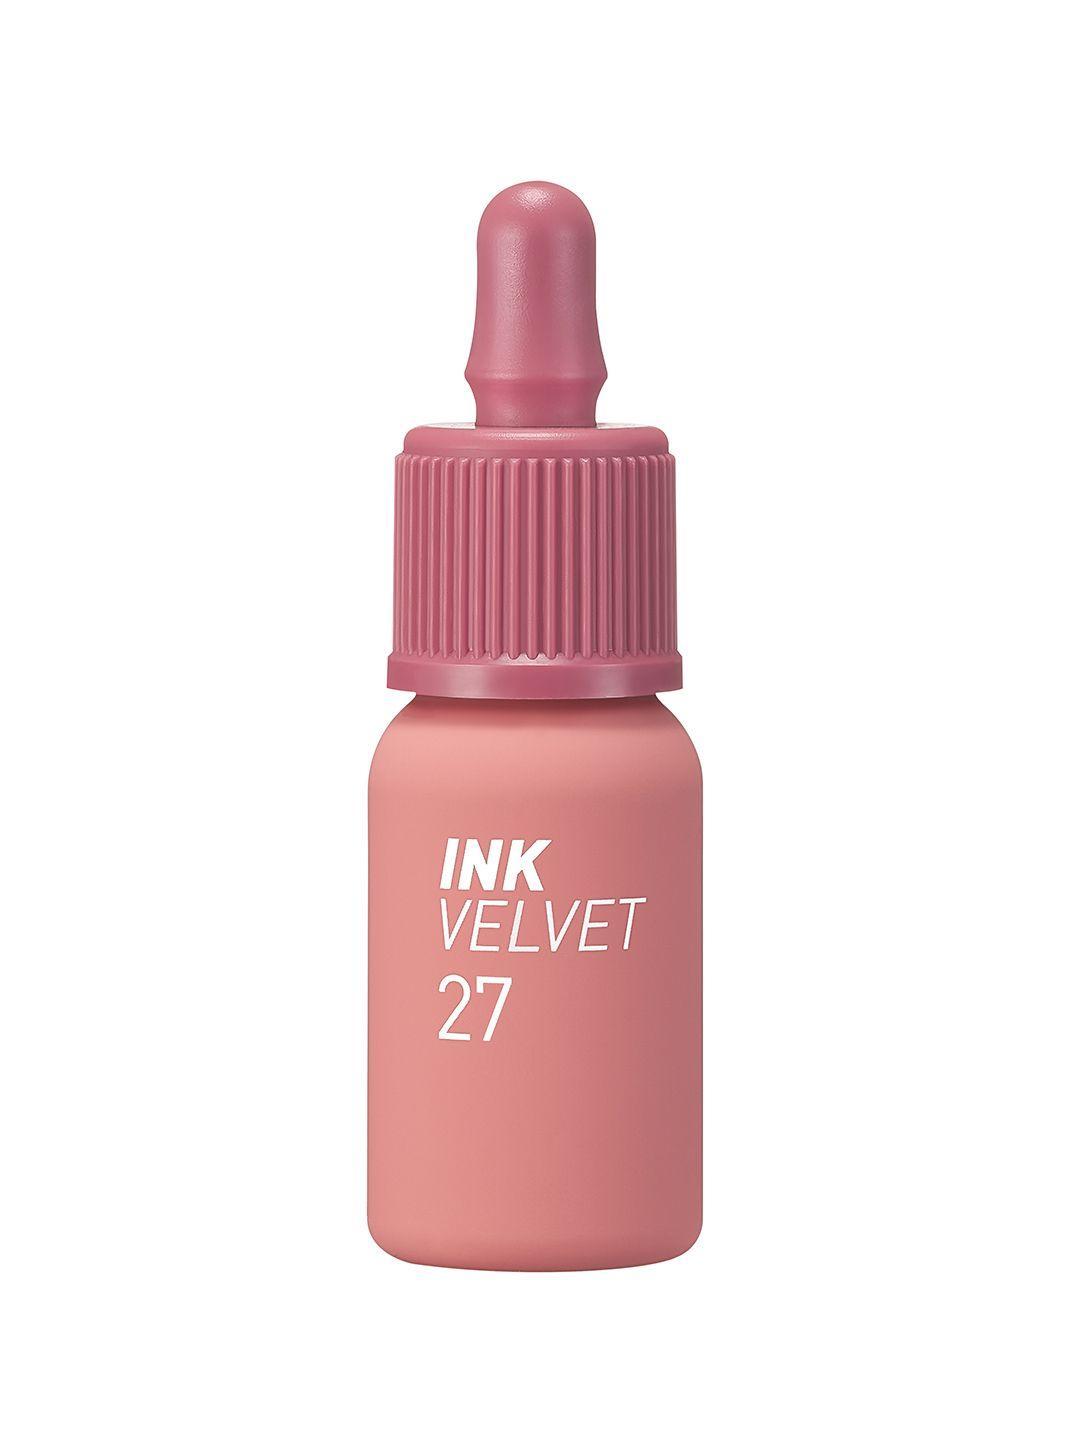 peripera ink velvet liquid lipstick 4g - strawberry nude 027